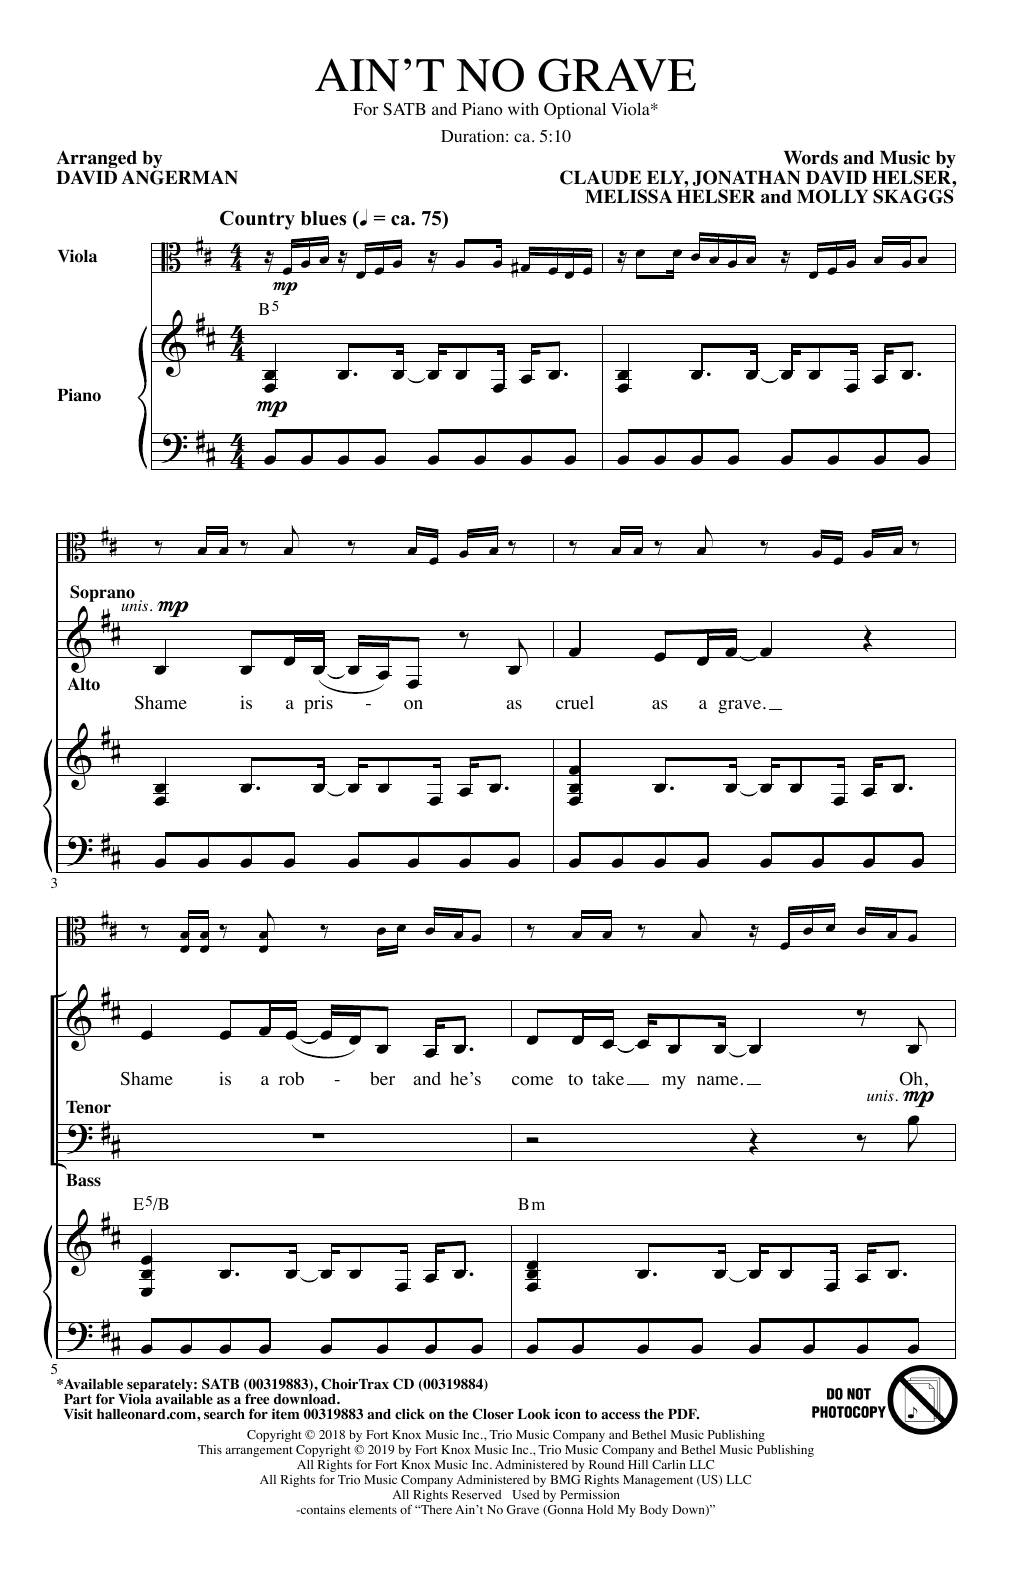 Bethel Worship Ain't No Grave (arr. David Angerman) Sheet Music Notes & Chords for SATB Choir - Download or Print PDF